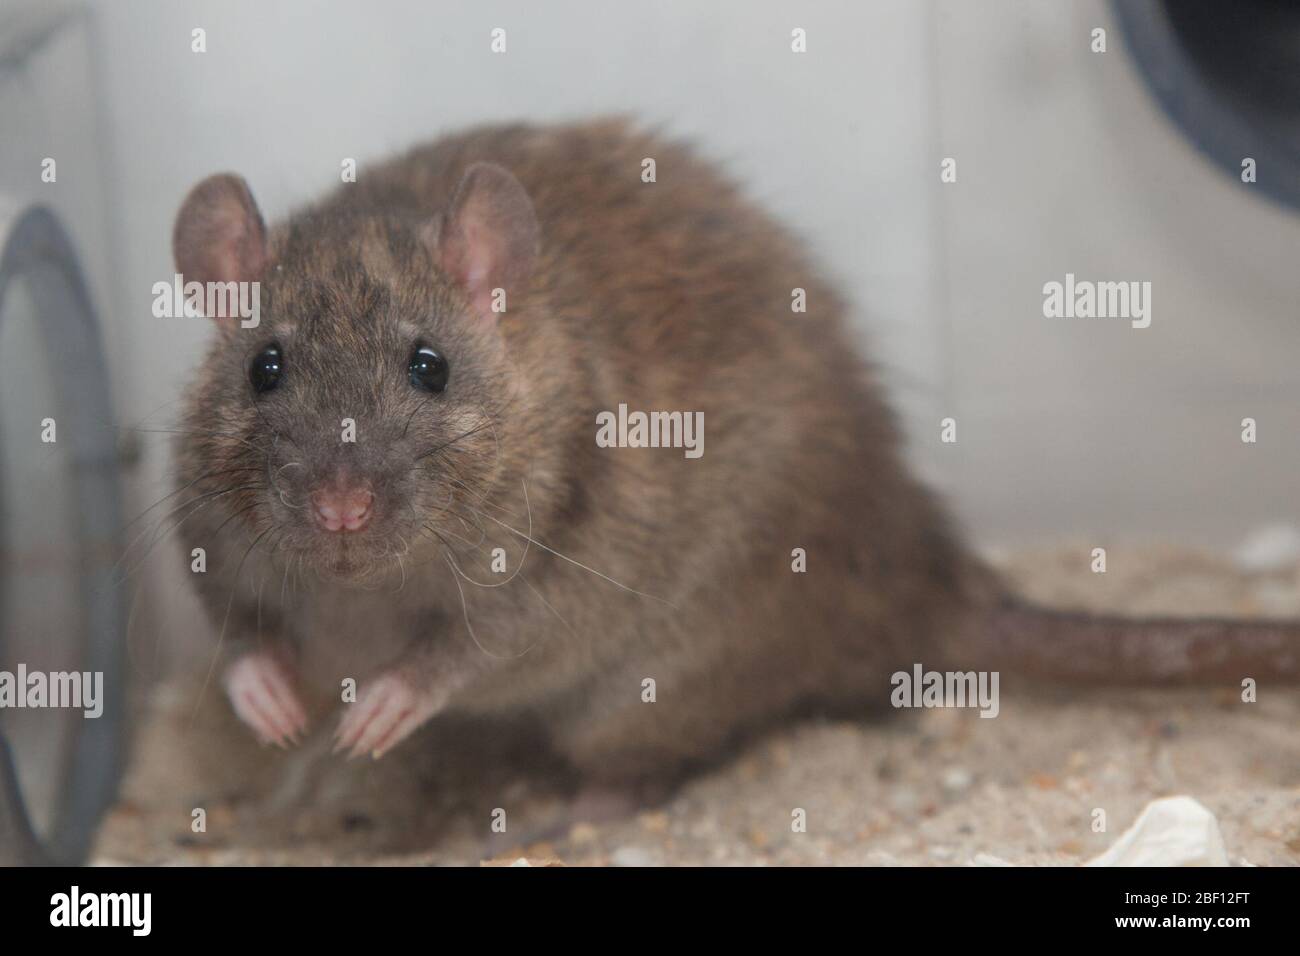 Norway Rat. Species: norvegicus,Genus: Rattus,Family: Muridae,Order: Rodentia,Class: Mammalia,Phylum: Chordata,Kingdom: Animalia,Norway Rat,Brown Rat,Rodent,Think Tank Stock Photo